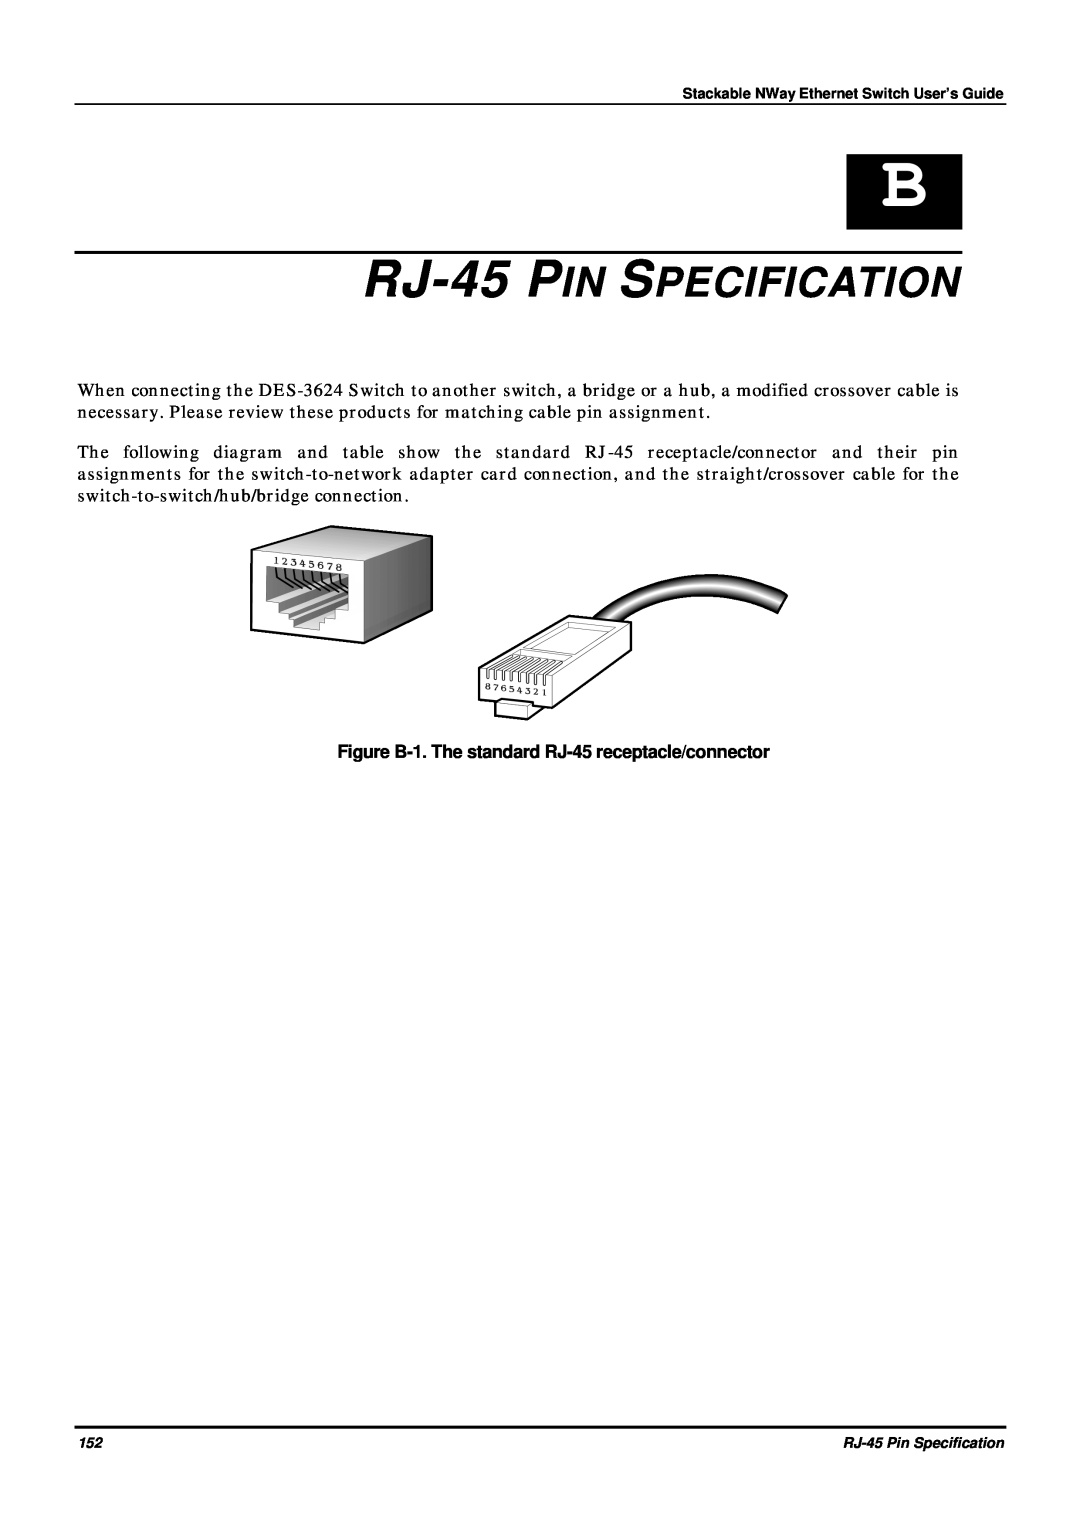 D-Link DES-3624 manual RJ-45 PIN SPECIFICATION, Figure B-1. The standard RJ-45 receptacle/connector 